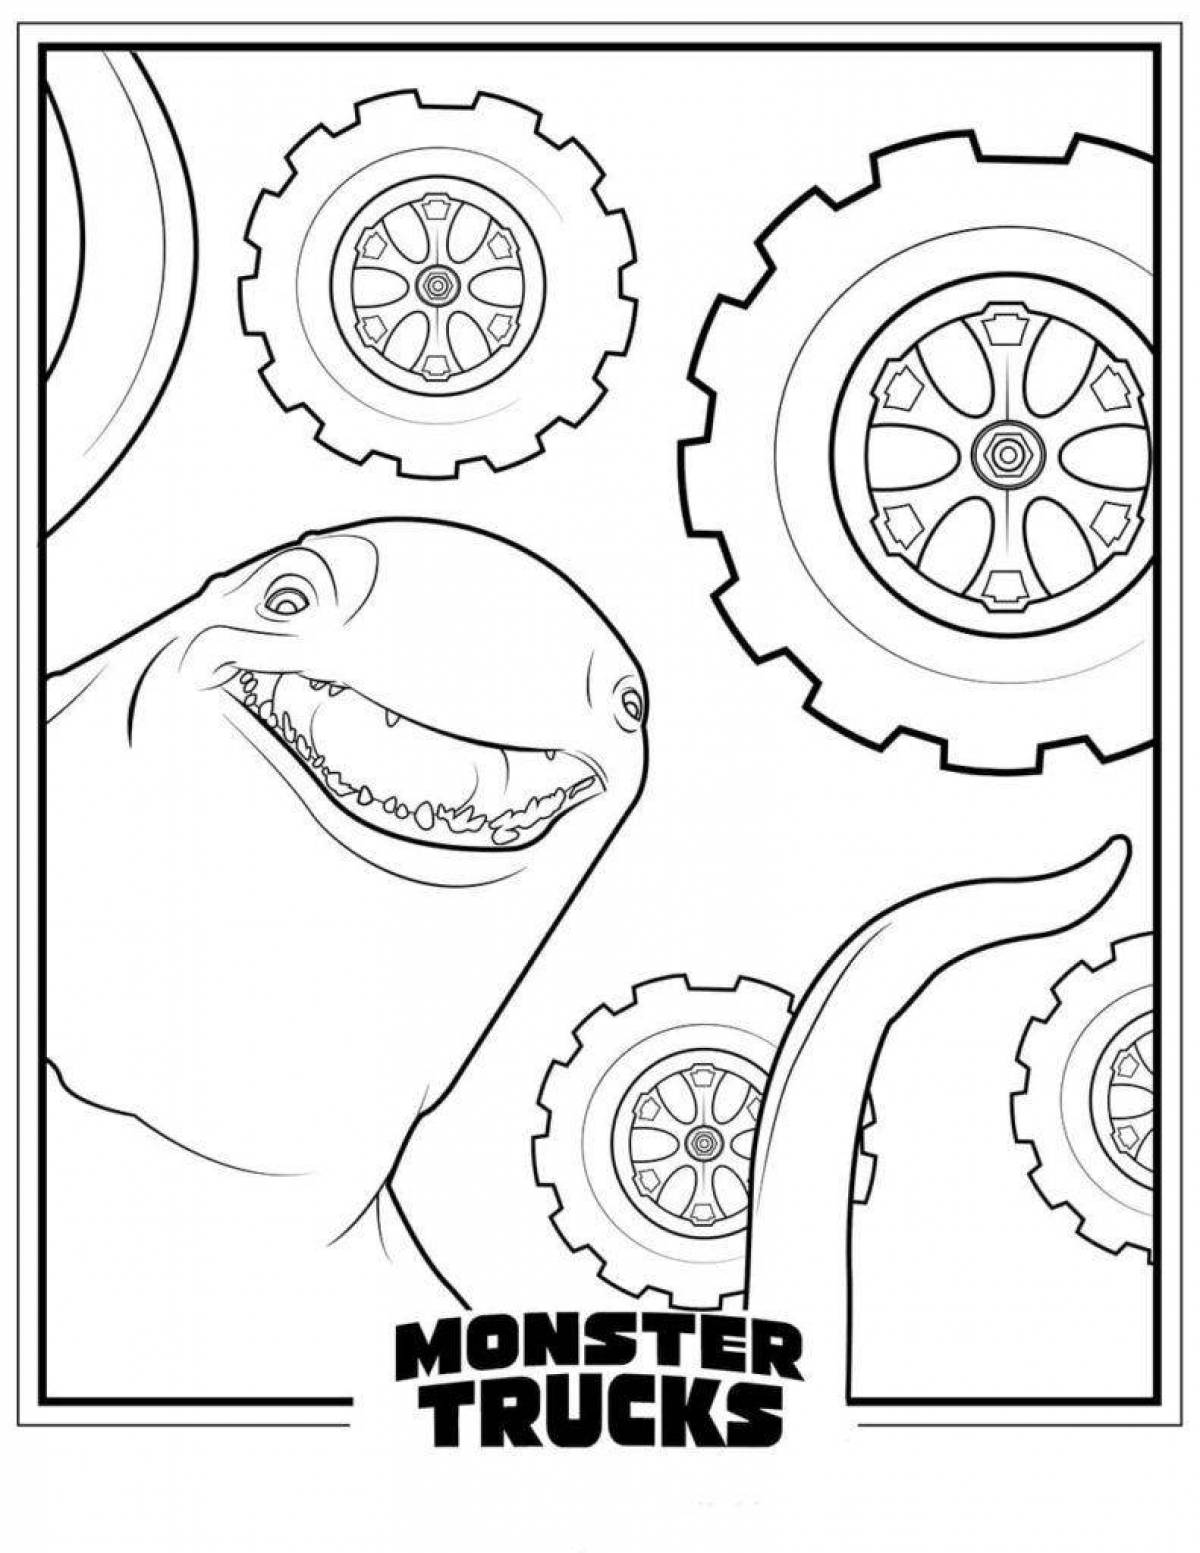 Great monster truck shark coloring book